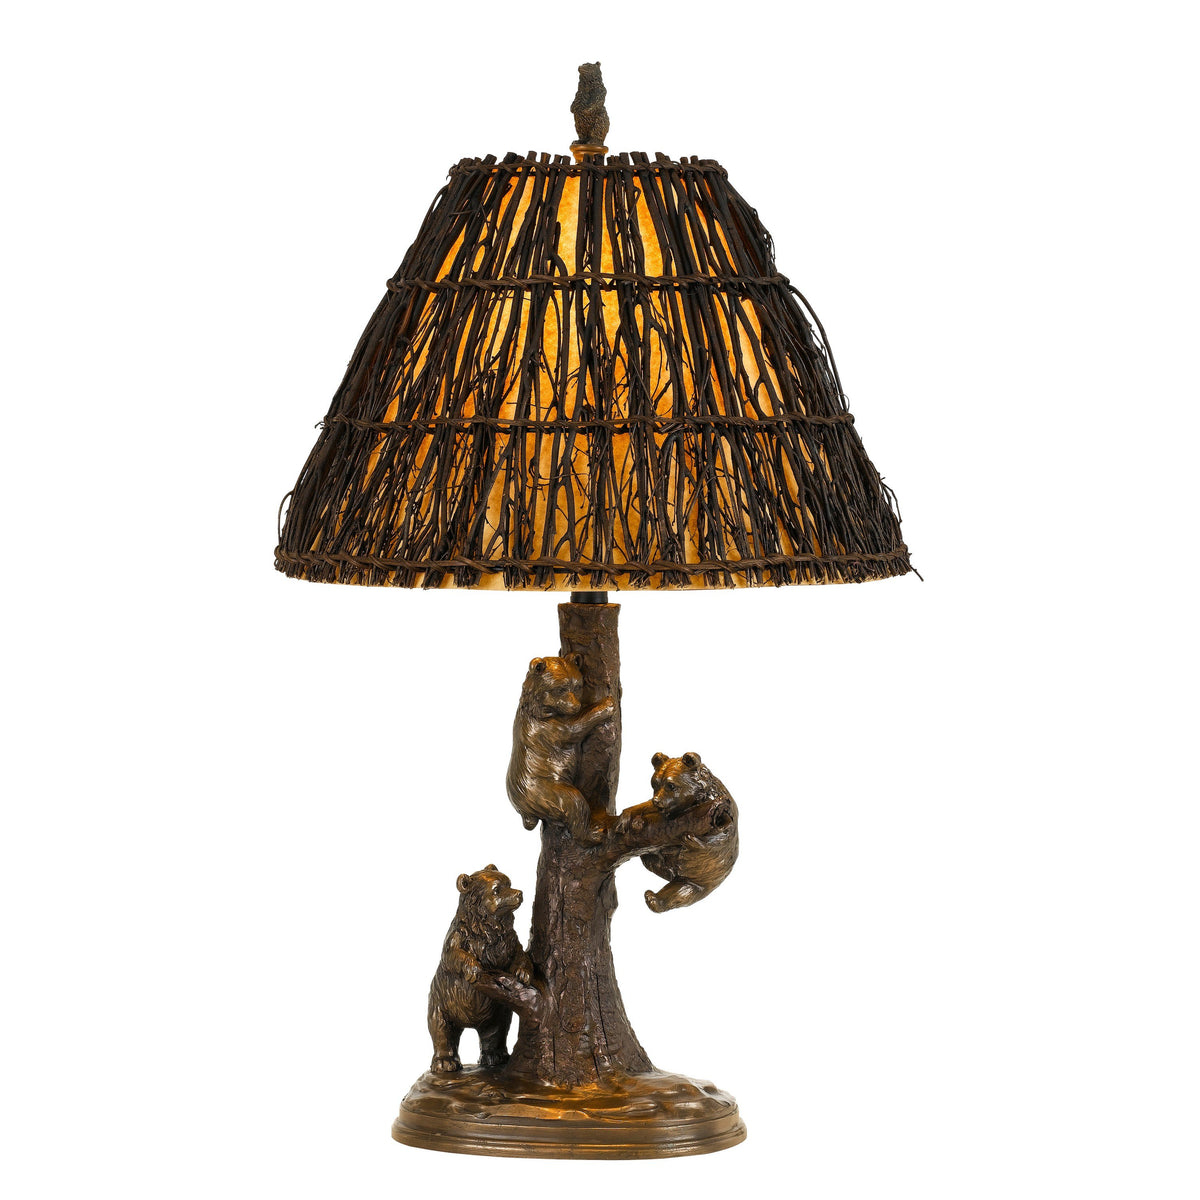 150 Watt Resin Body Table Lamp with Bear Design and Twig Shade, Bronze - BM224880